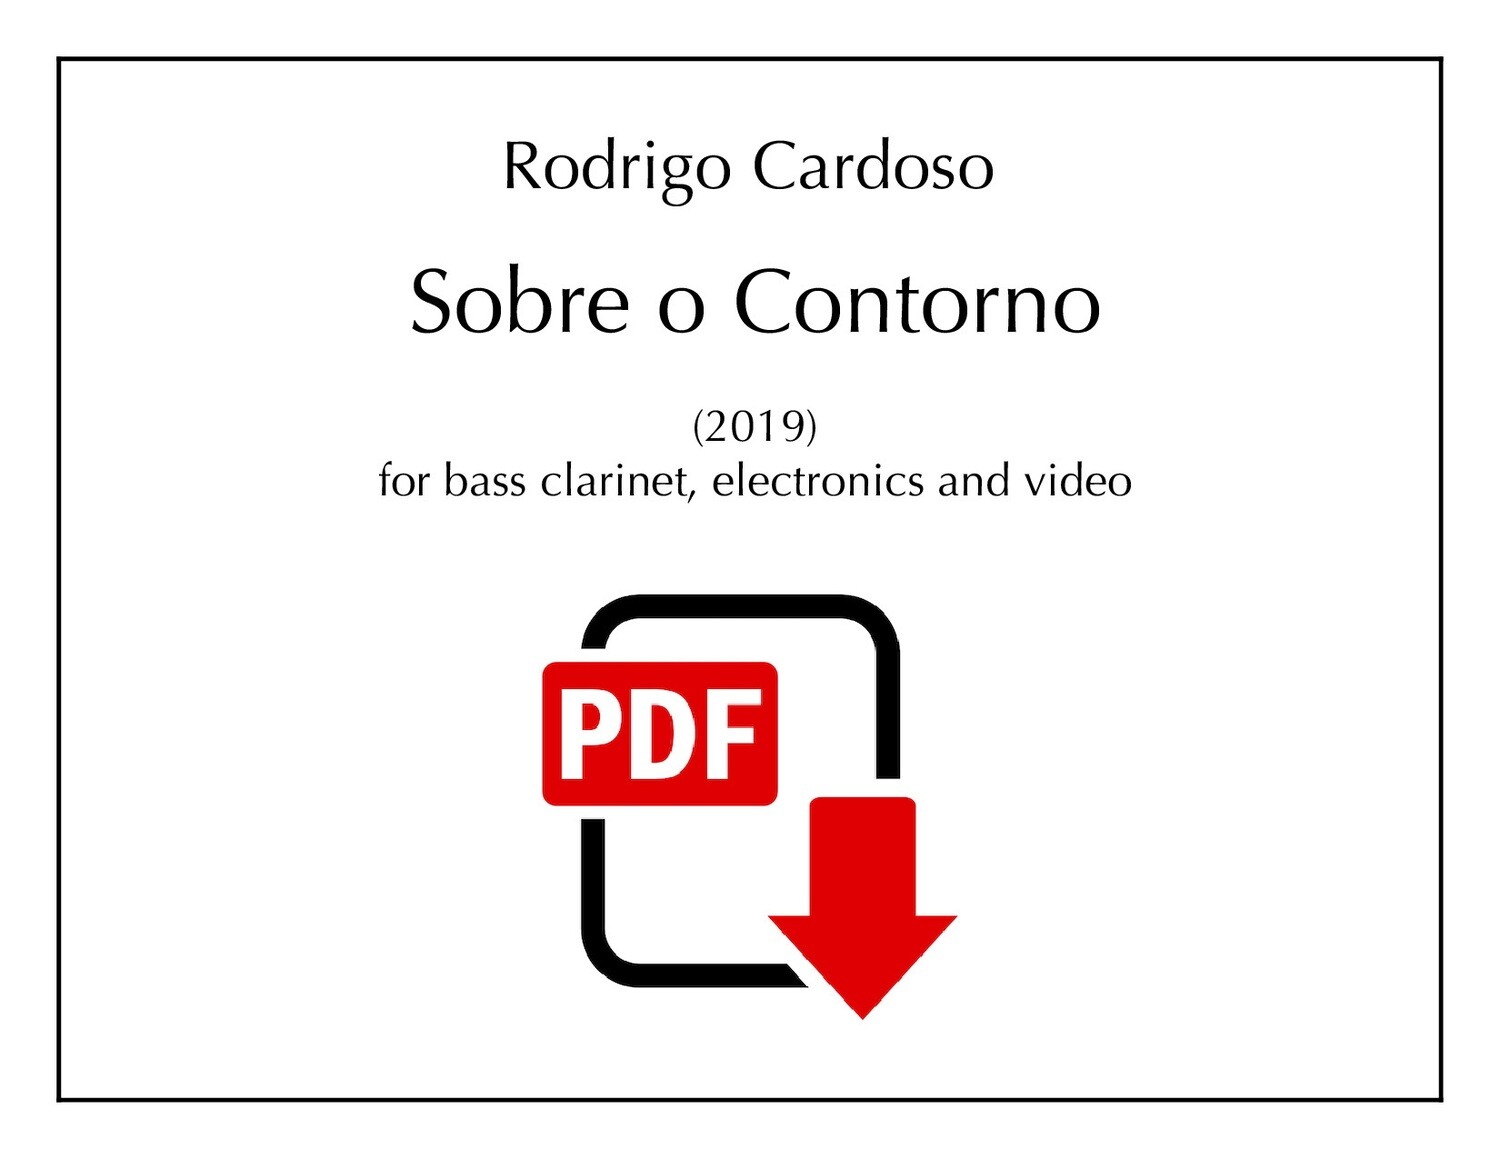 Cardoso: Sobre o Contorno (PDF)